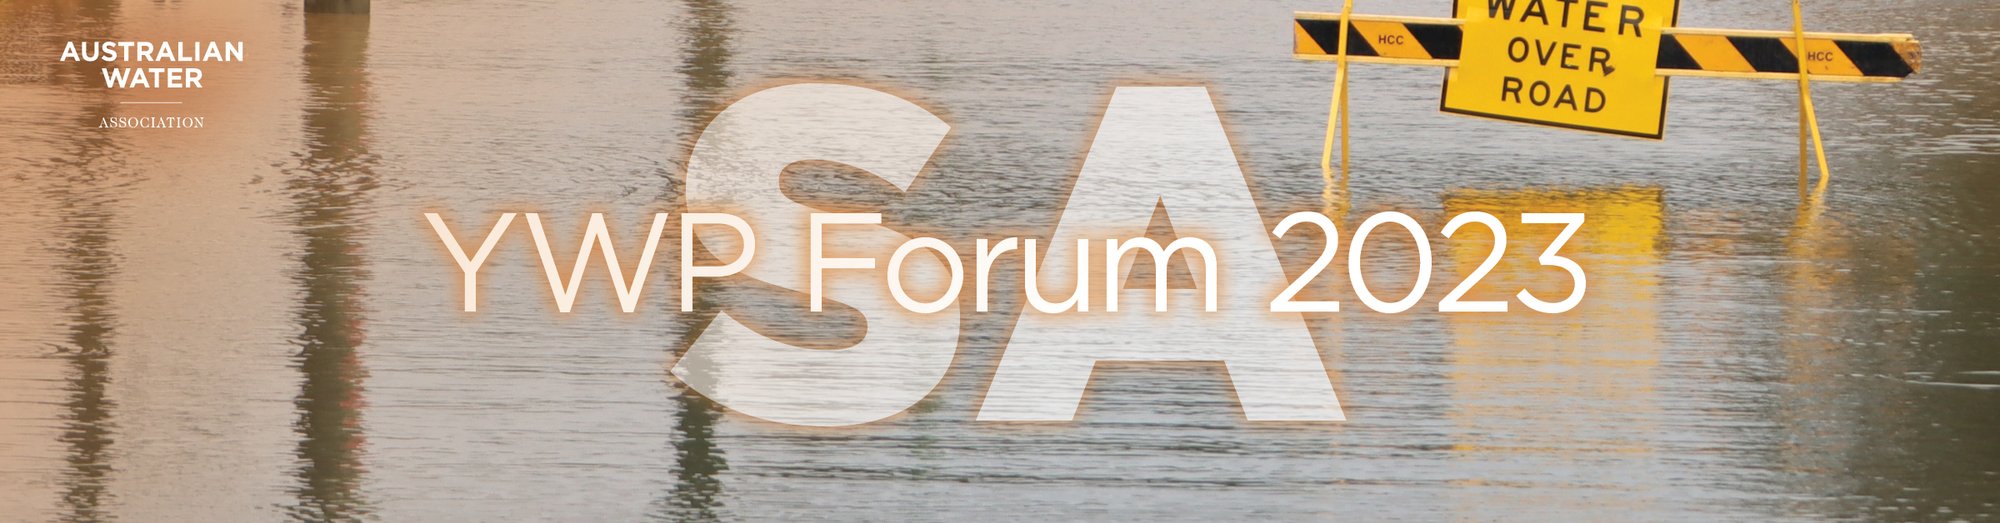 SA YWP Forum 2023_HubSpot Event Banner 1200x314px